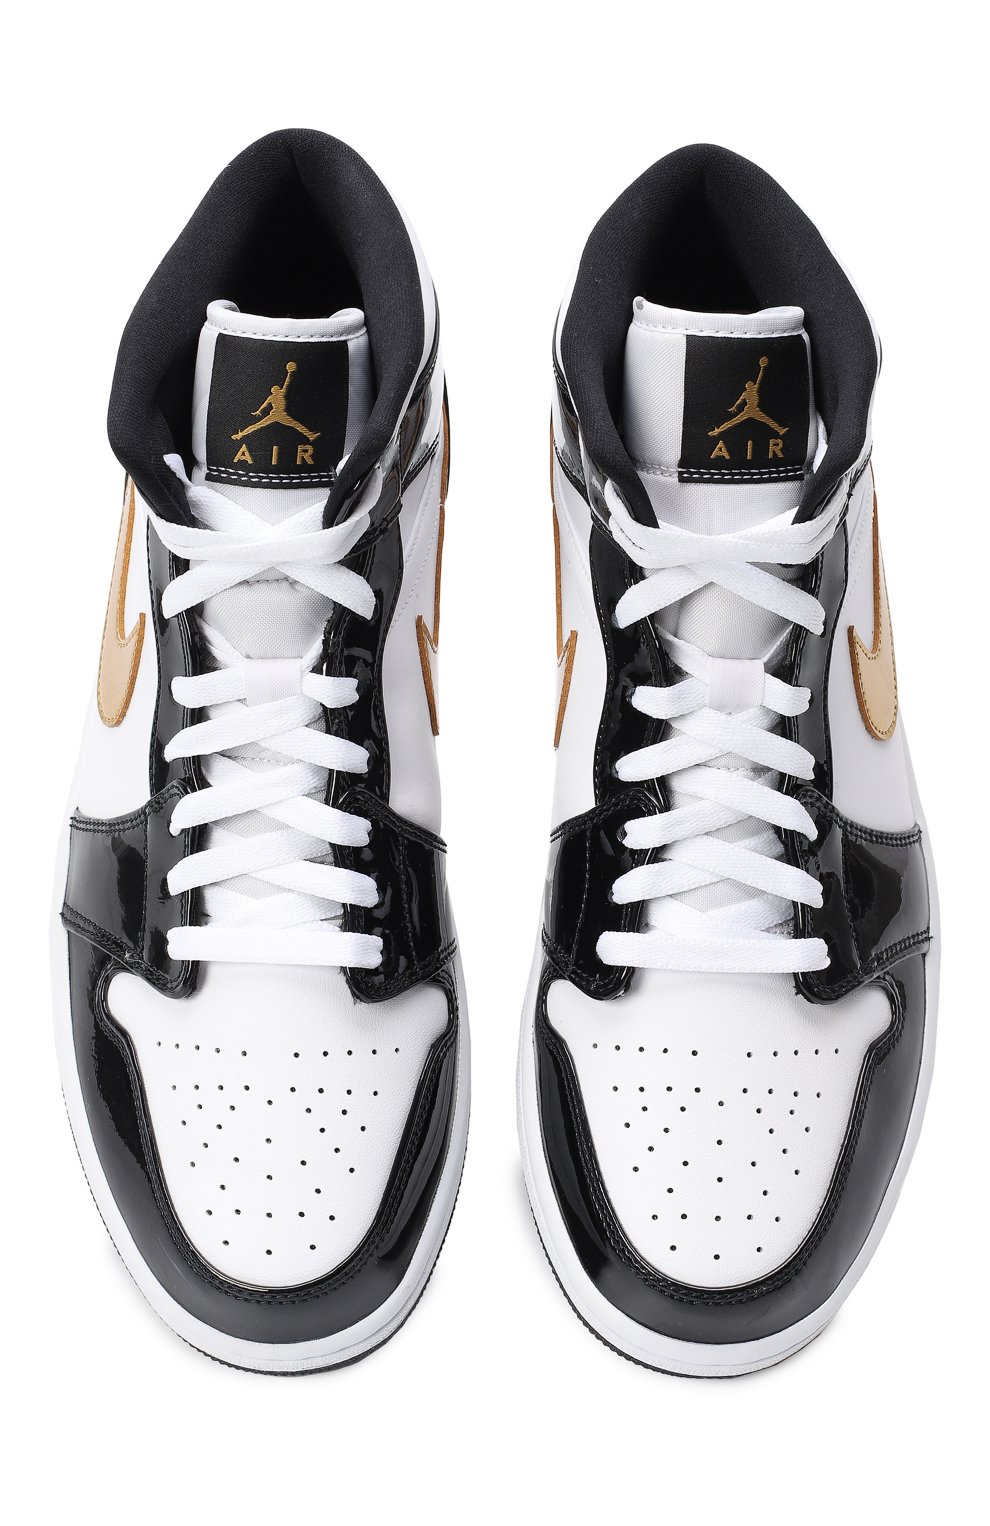 Кеды Air Jordan 1 Mid Patent Black White Gold | Nike | Чёрно-белый - 2